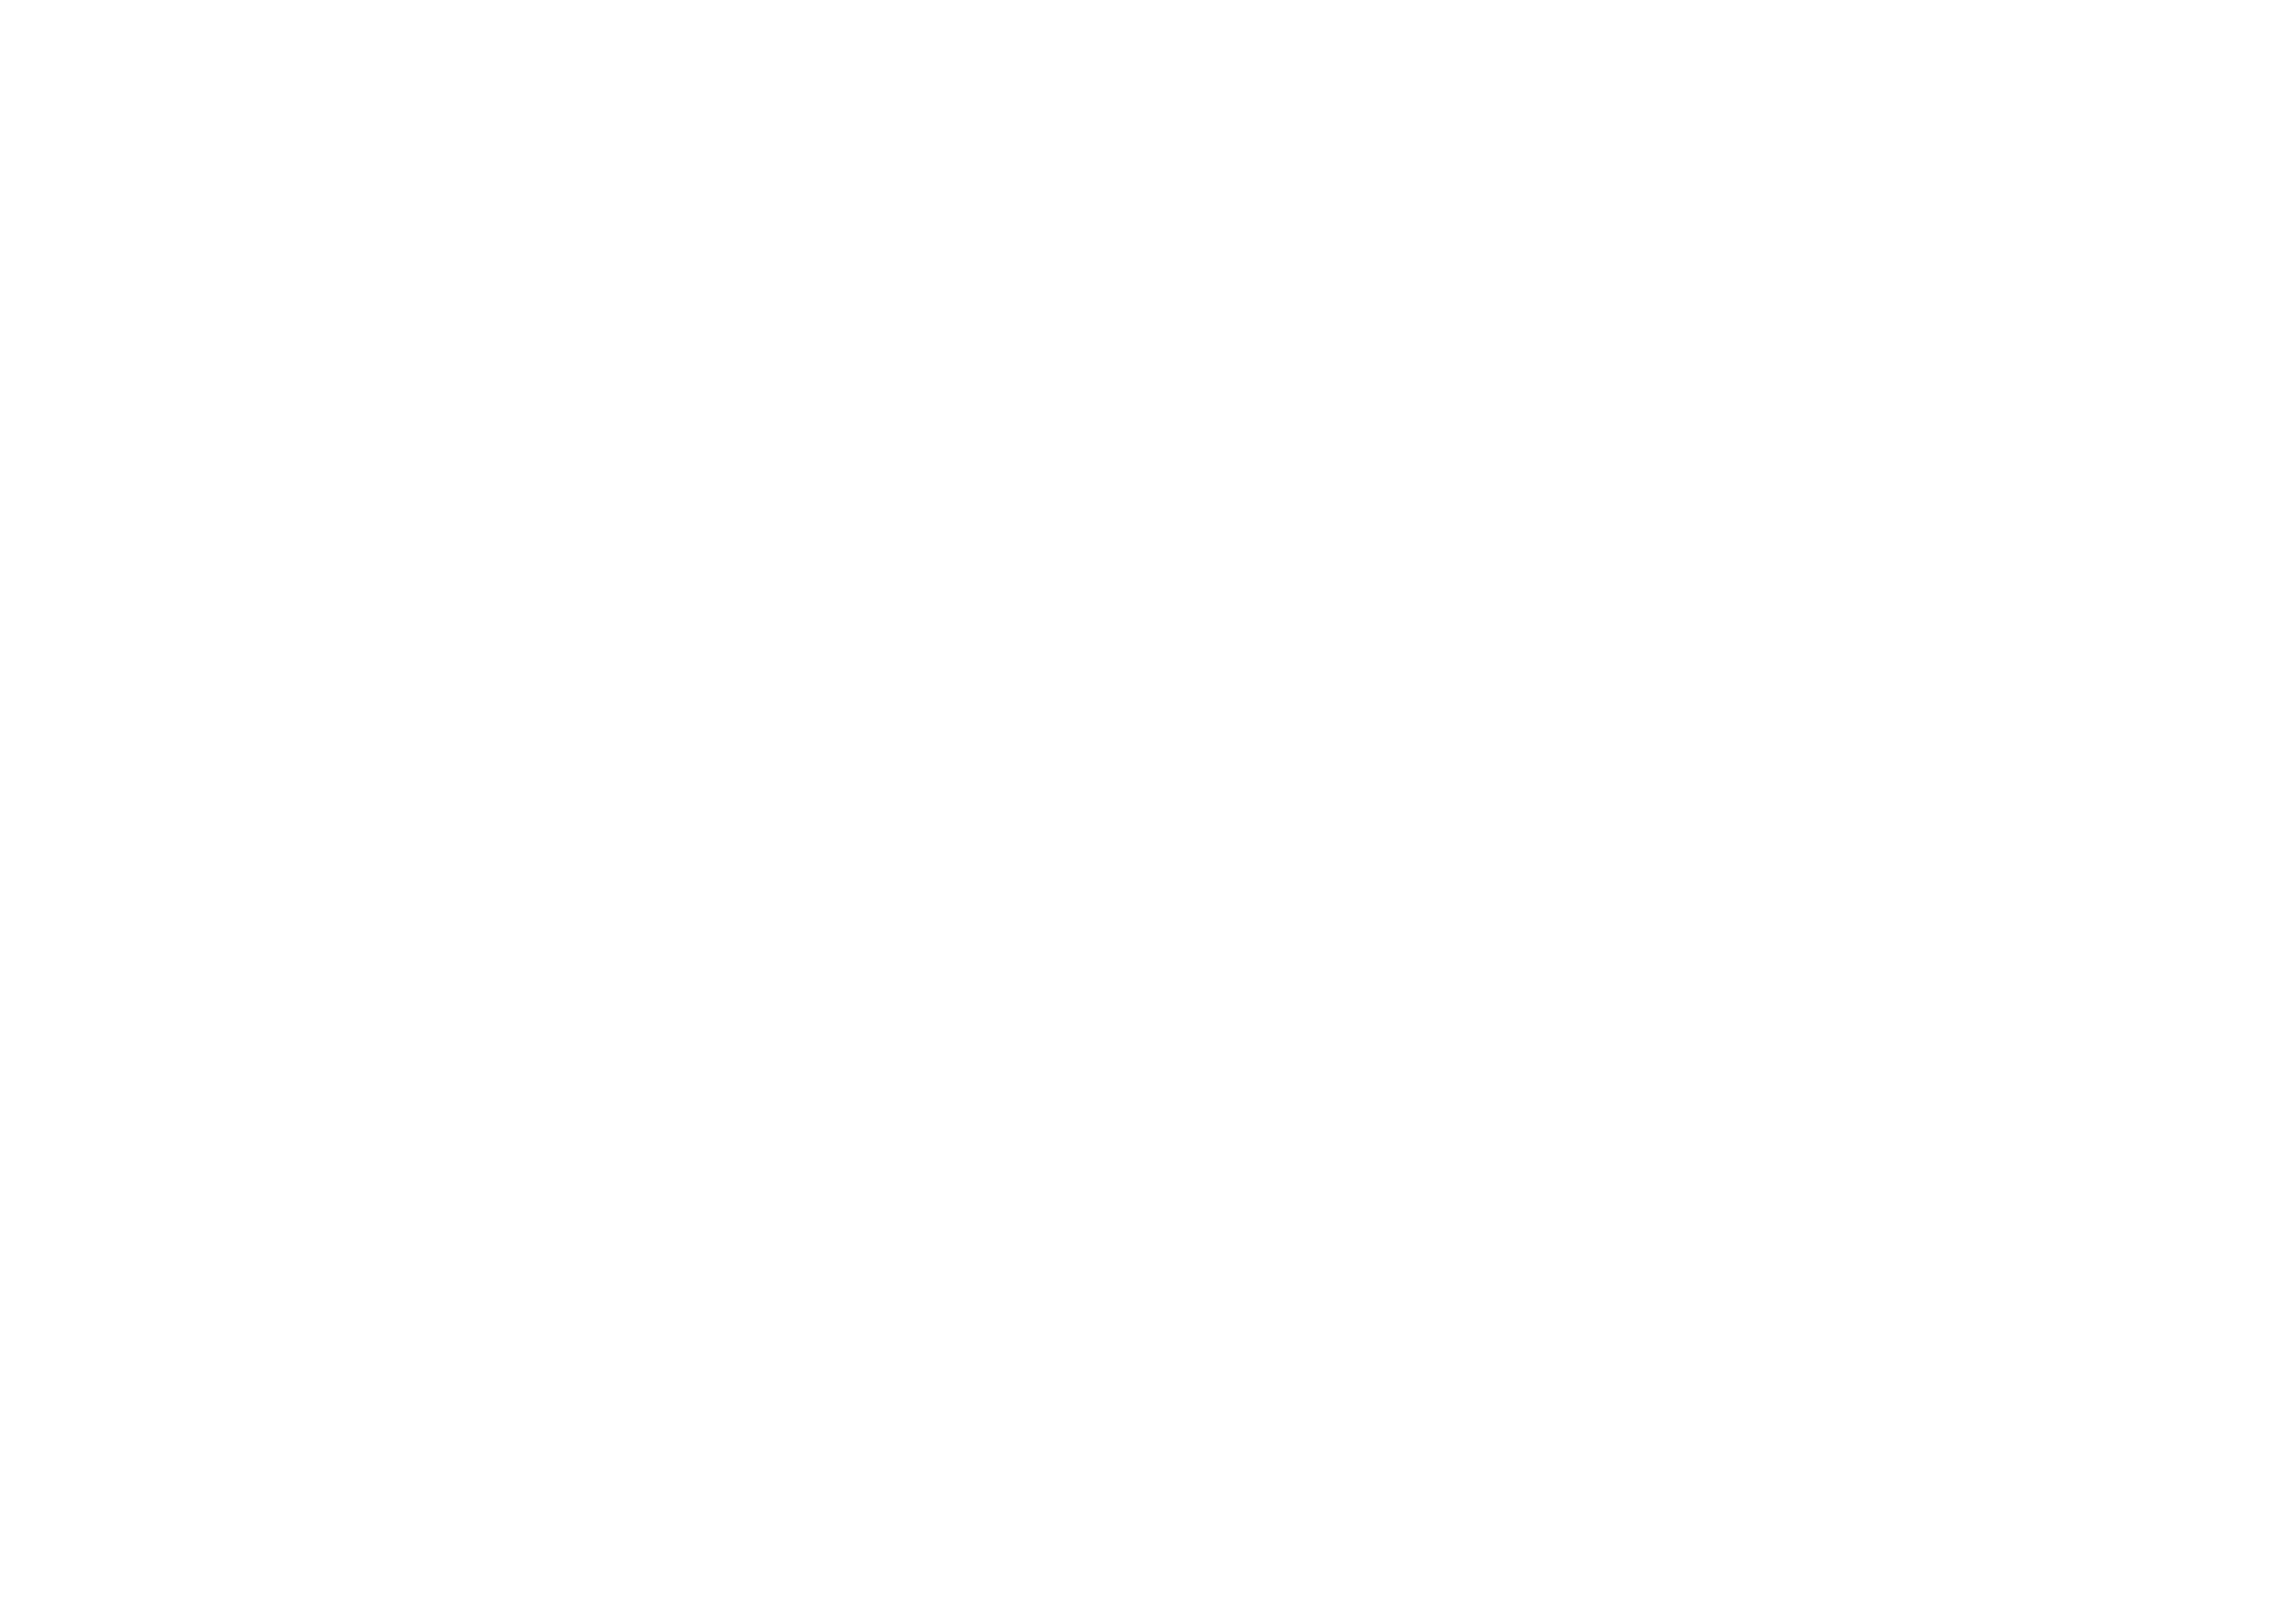 Gelista Gelato logo